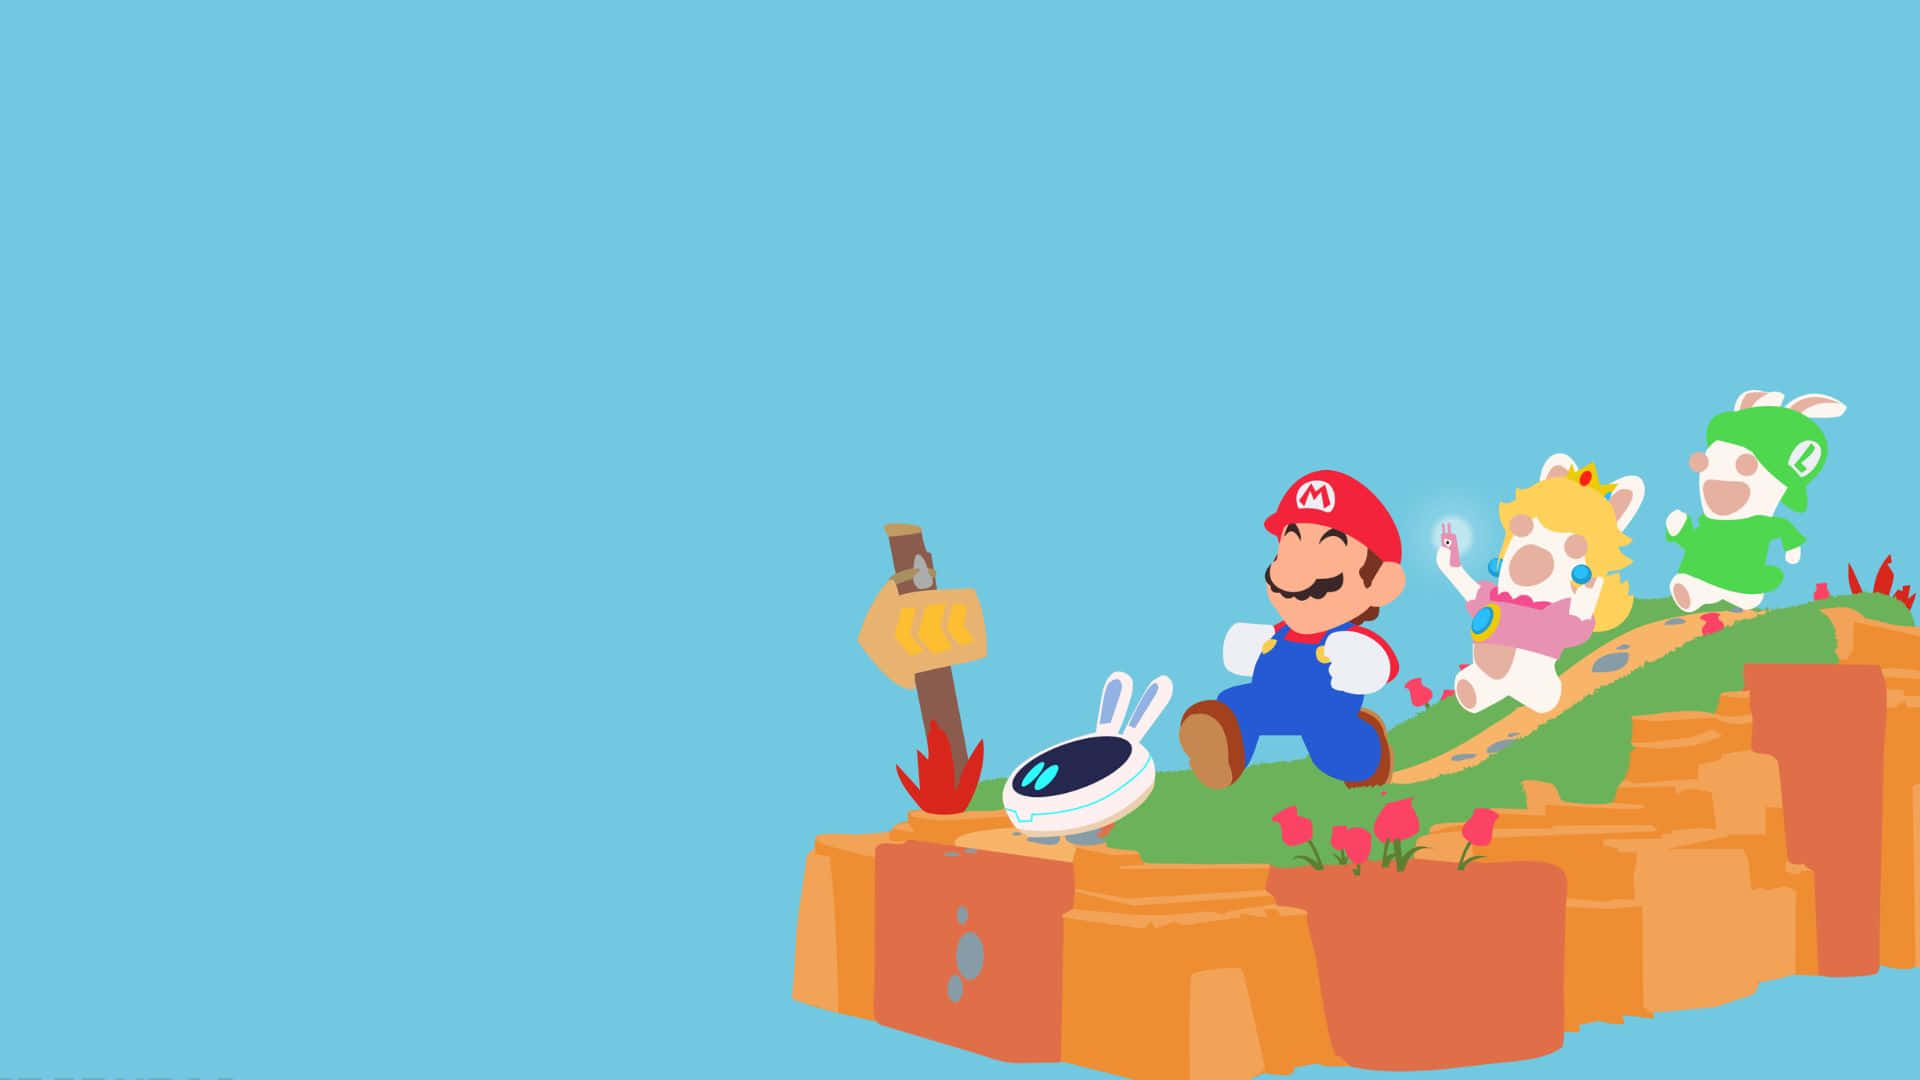 Retro 8-bit Mario in action: Jumping towards victory Wallpaper